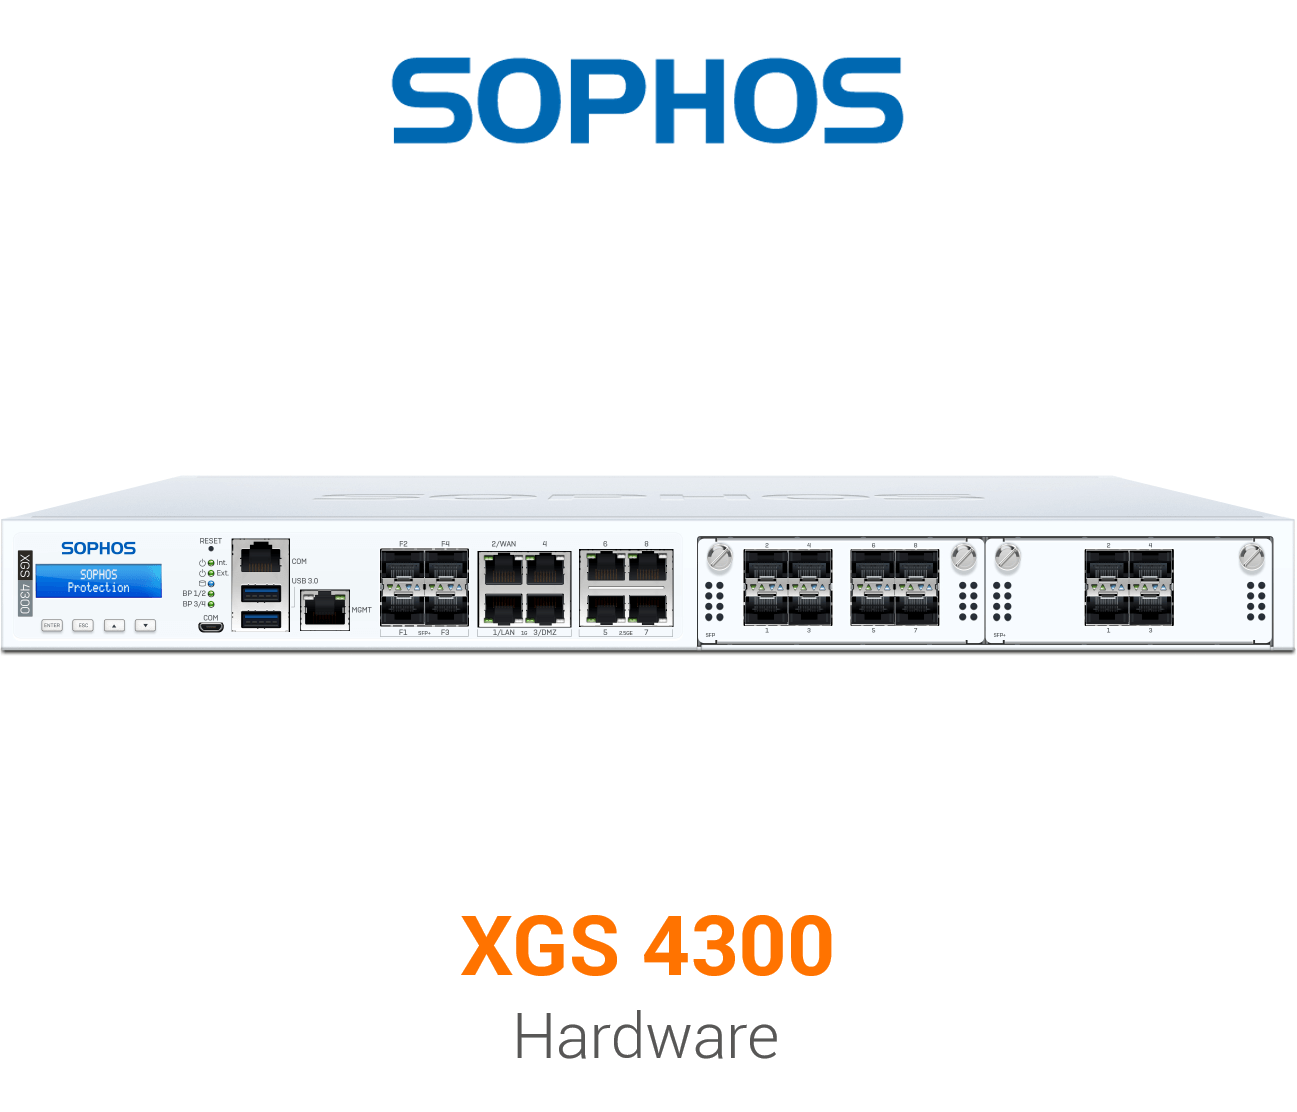 Sophos XGS 4300 Security Appliance